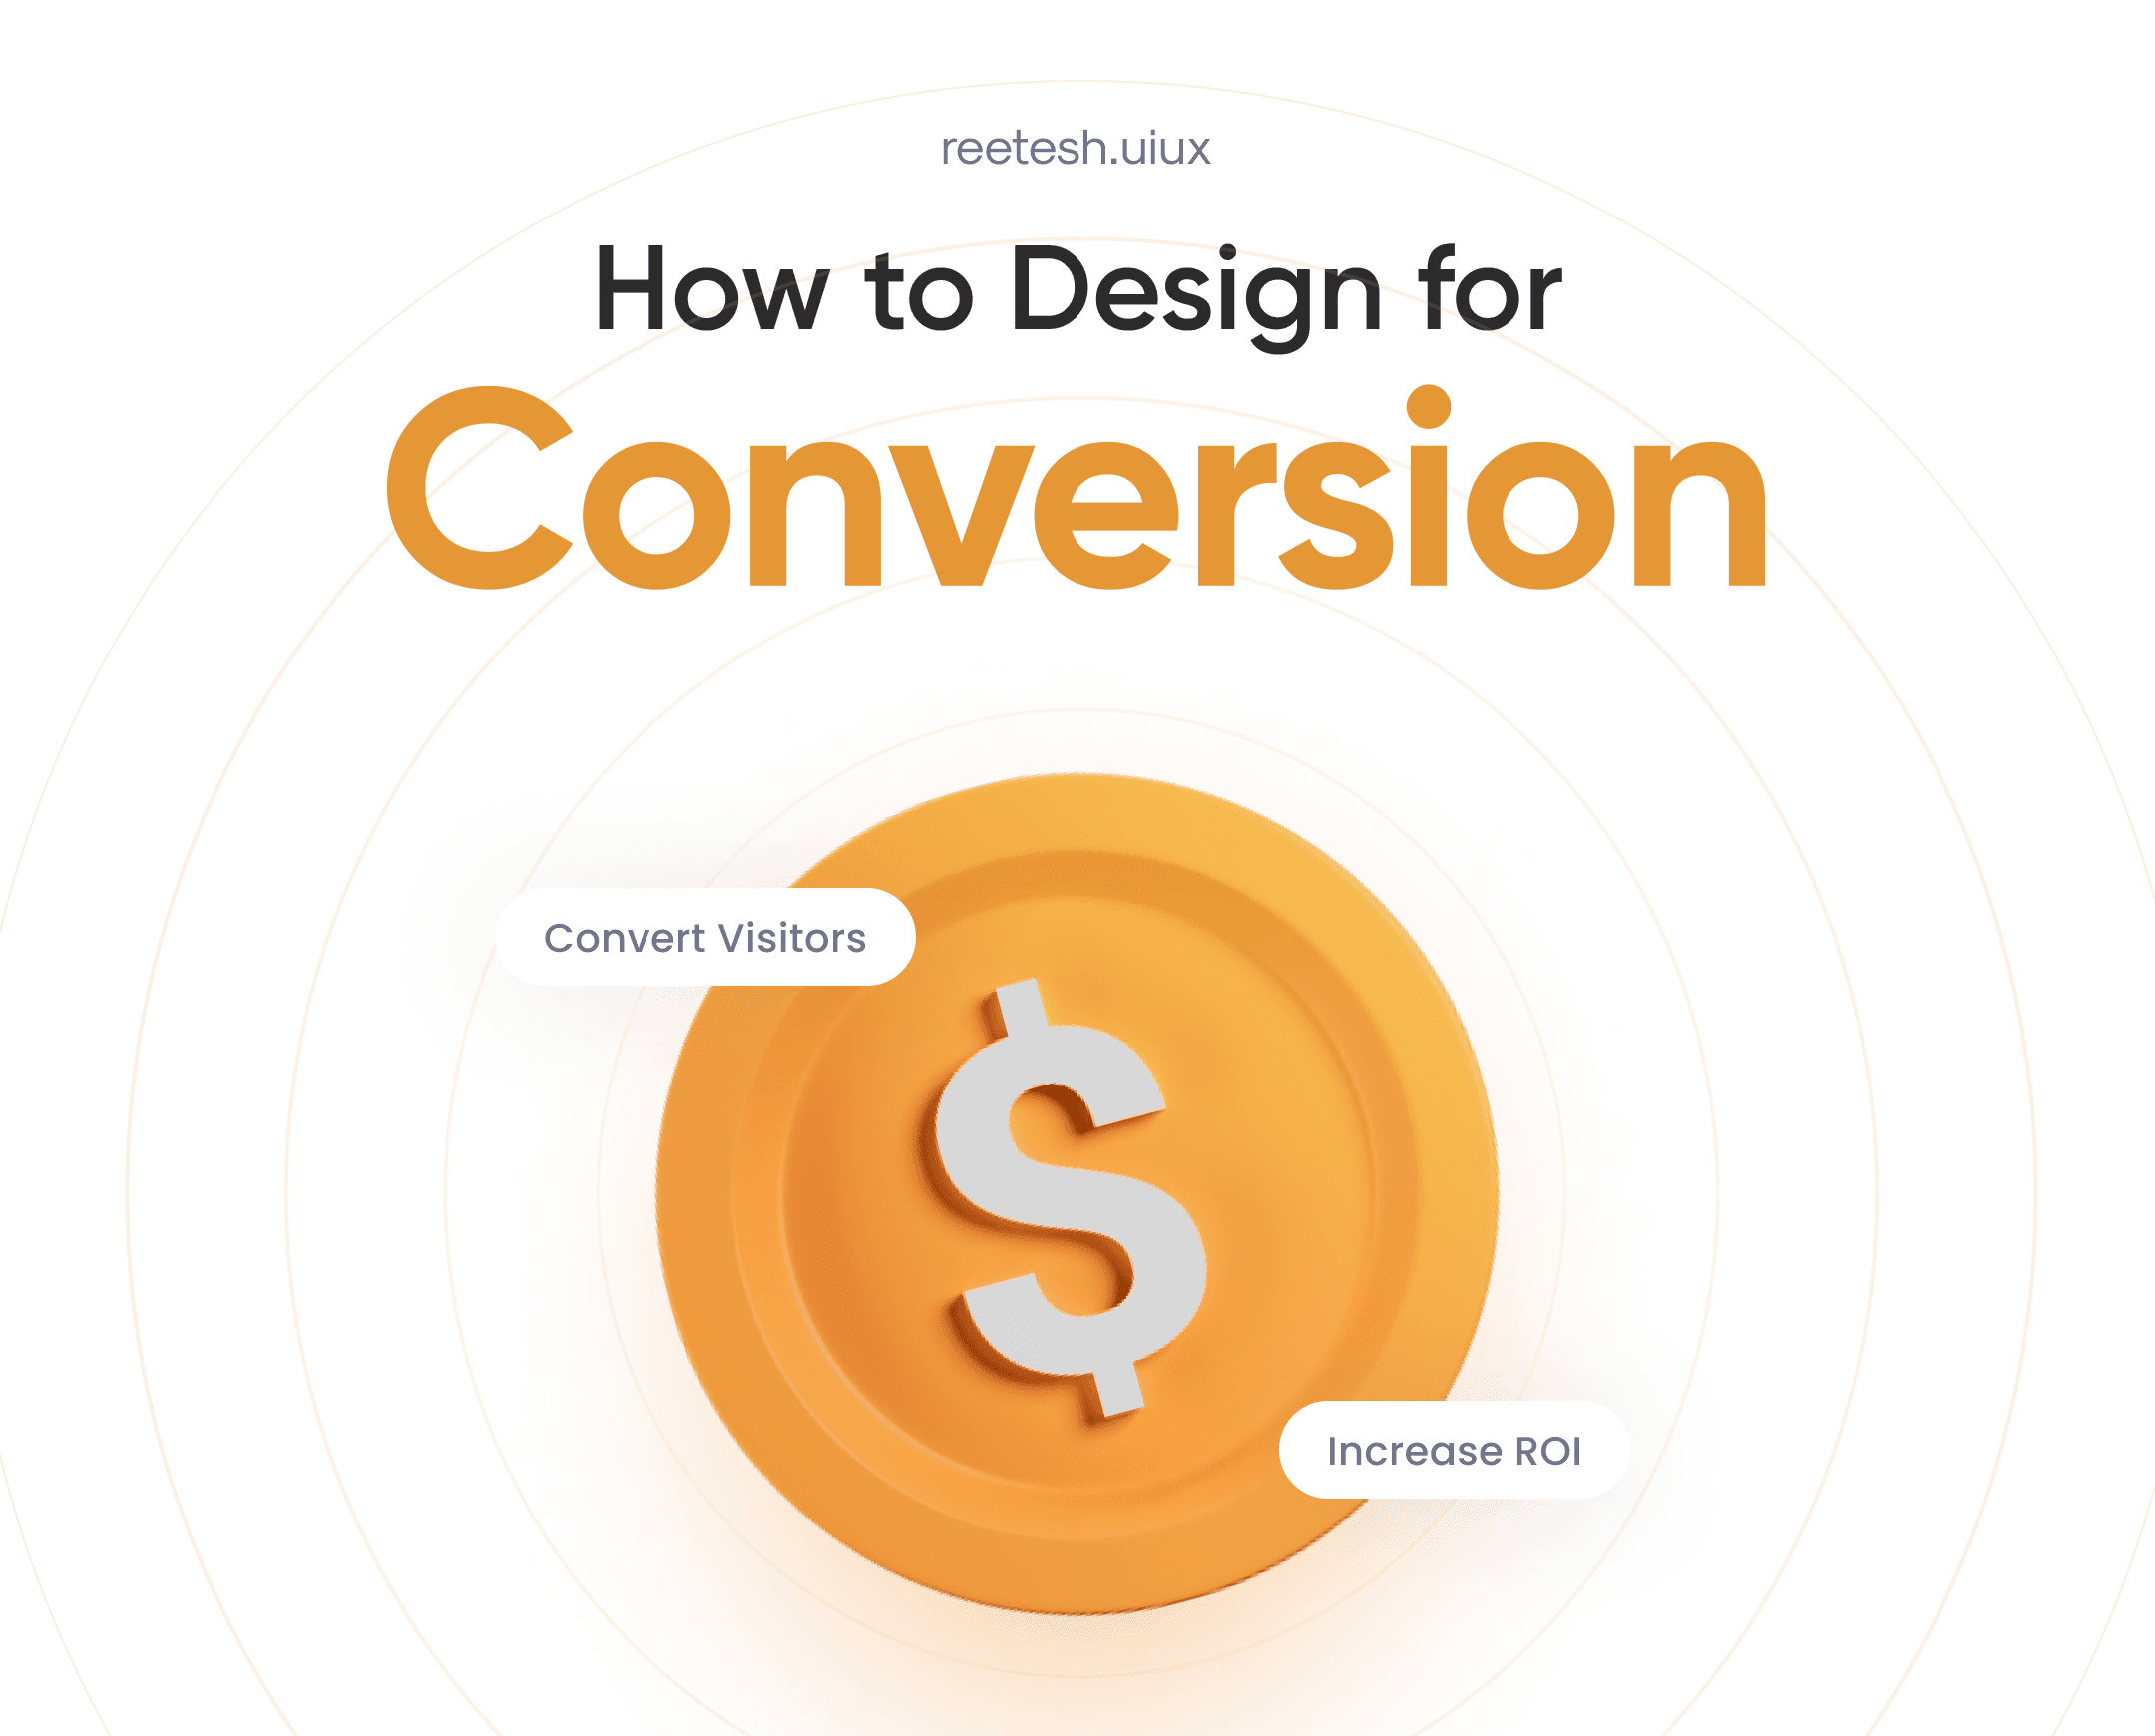 Design is essential for website conversion